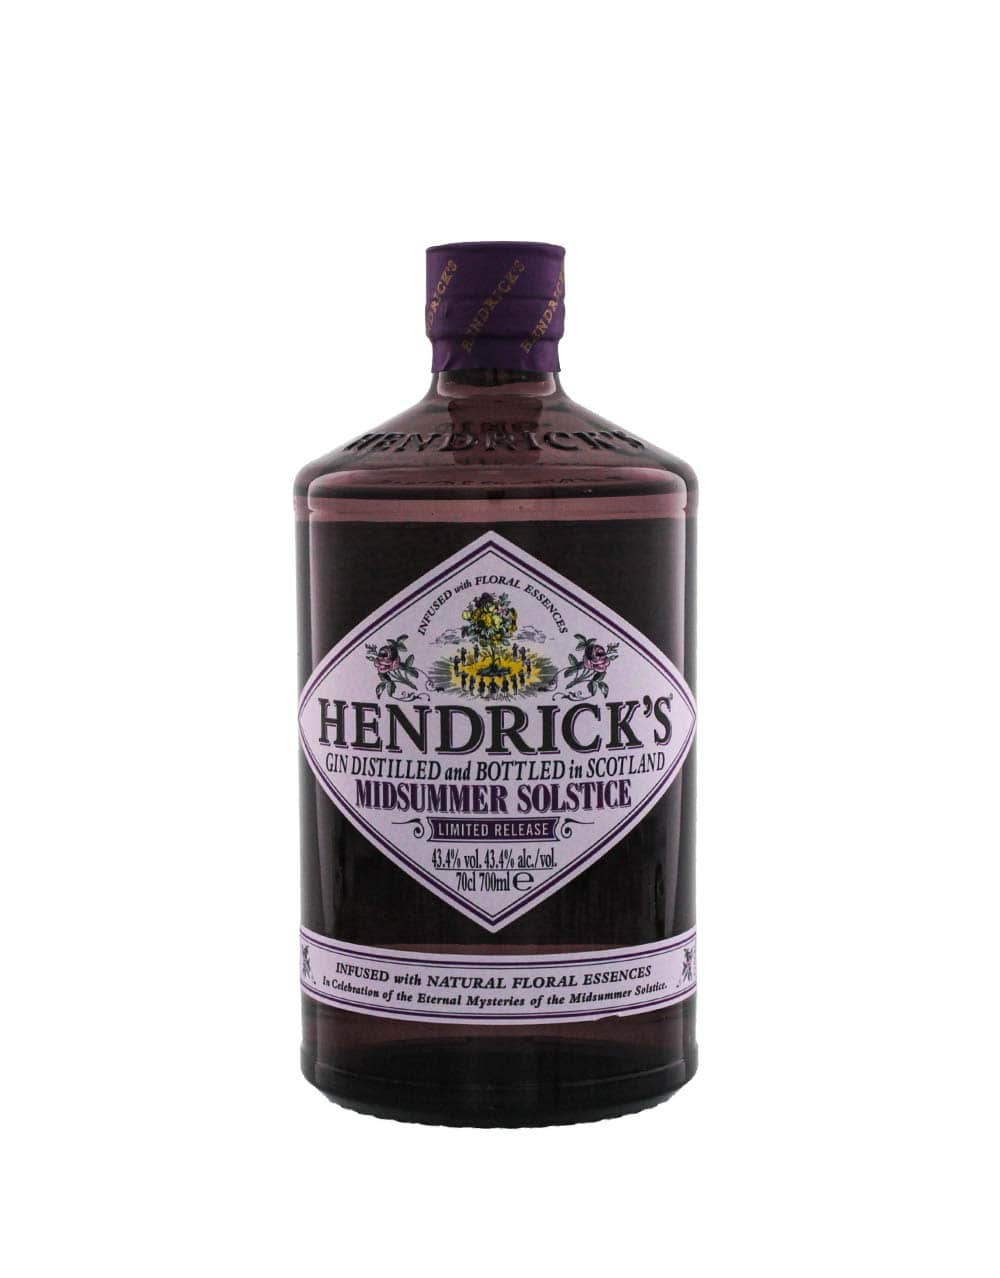 Hendrick's Gin Bundle